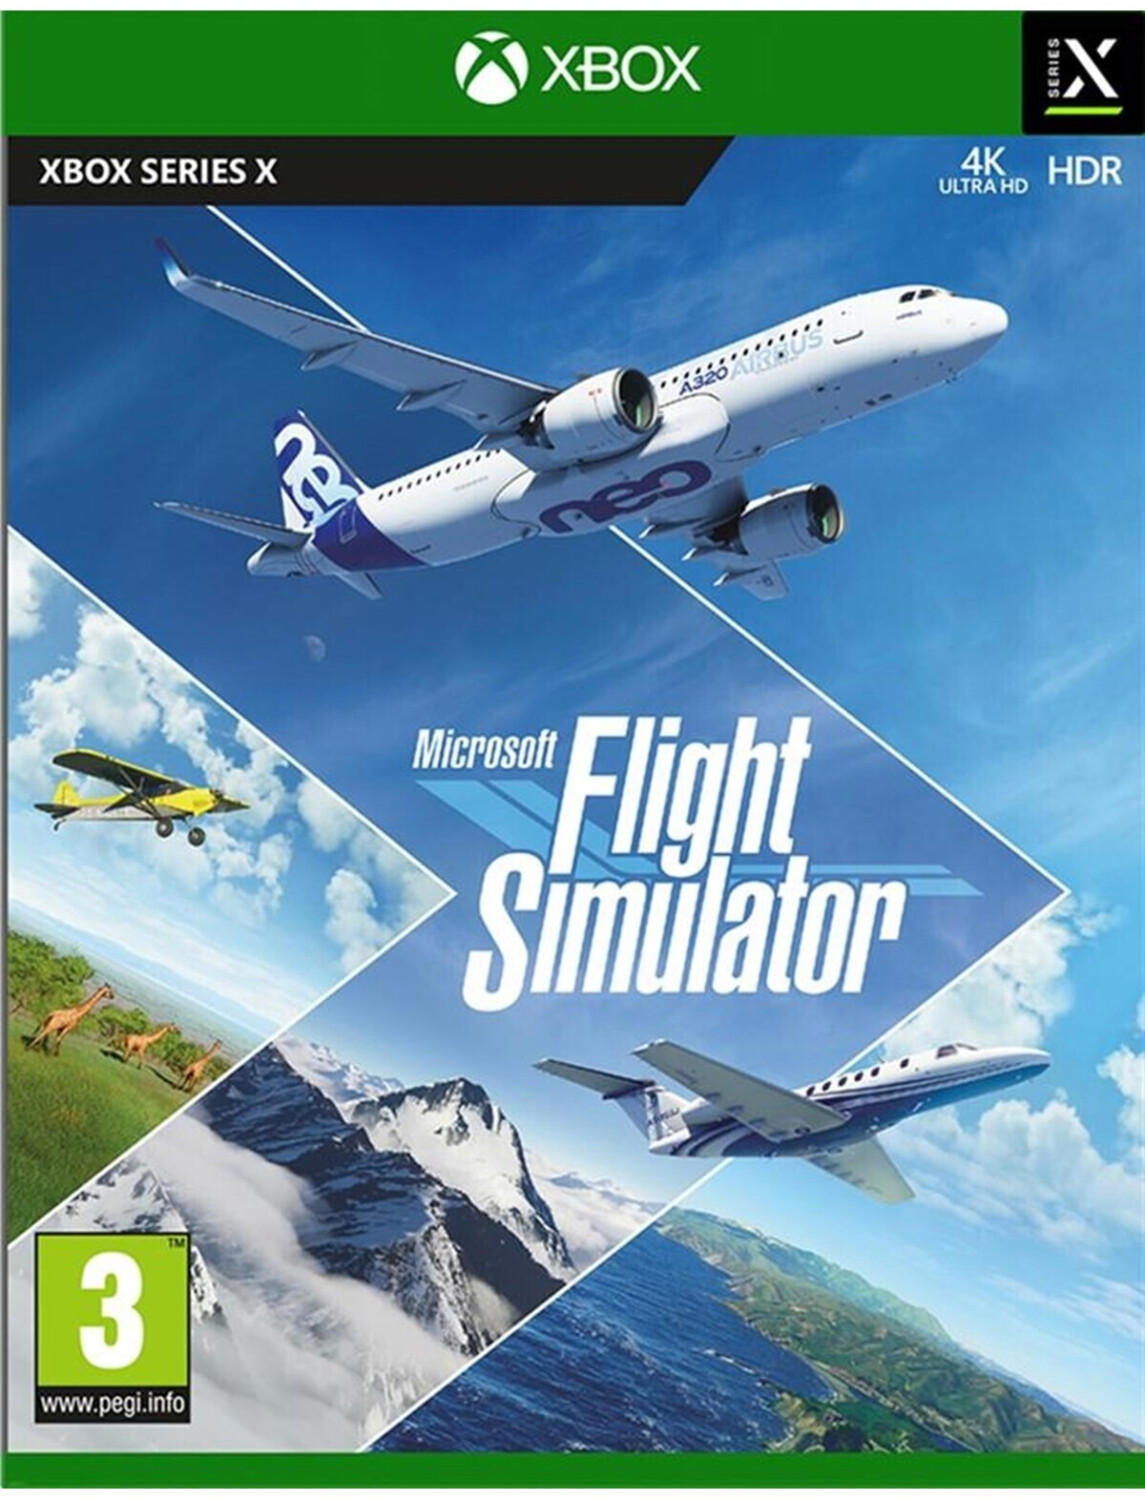 Microsoft Flight Simulator 2020 (Xbox Series X)